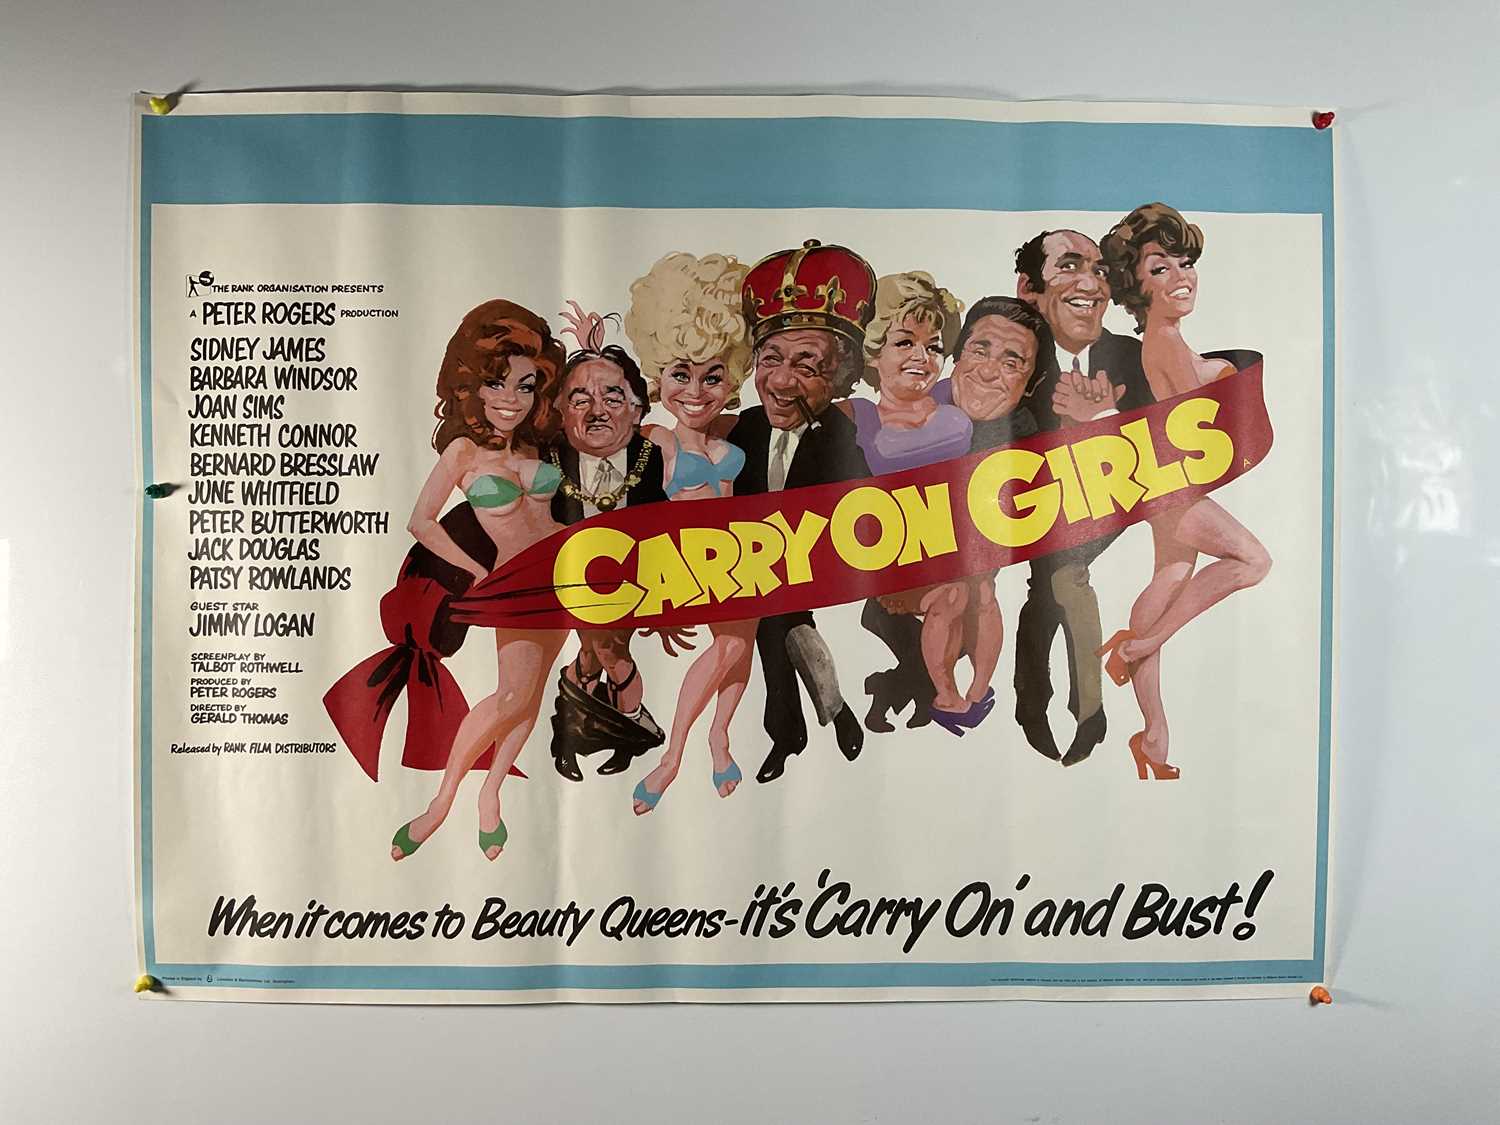 CARRY ON GIRLS (1973) UK Quad film poster, artwork by Arnaldo Putzu, rolled.